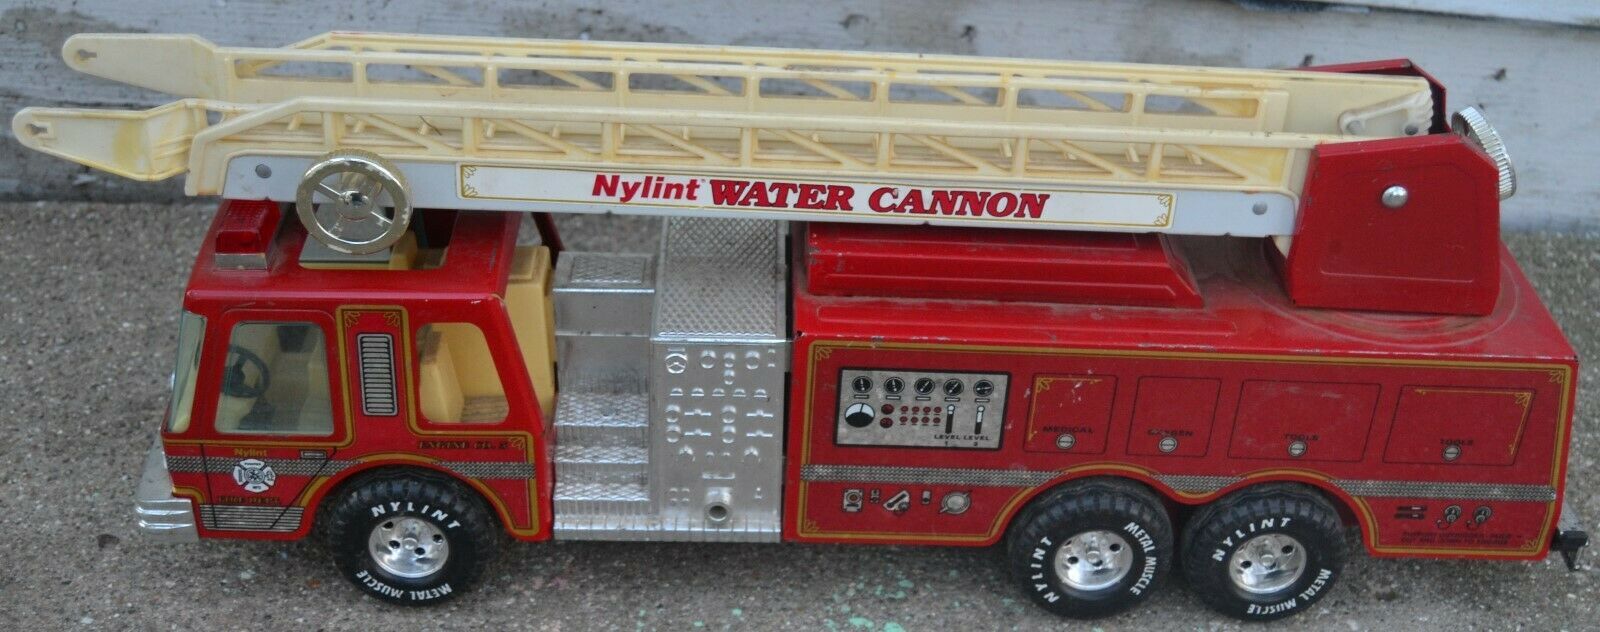 nylint metal fire truck